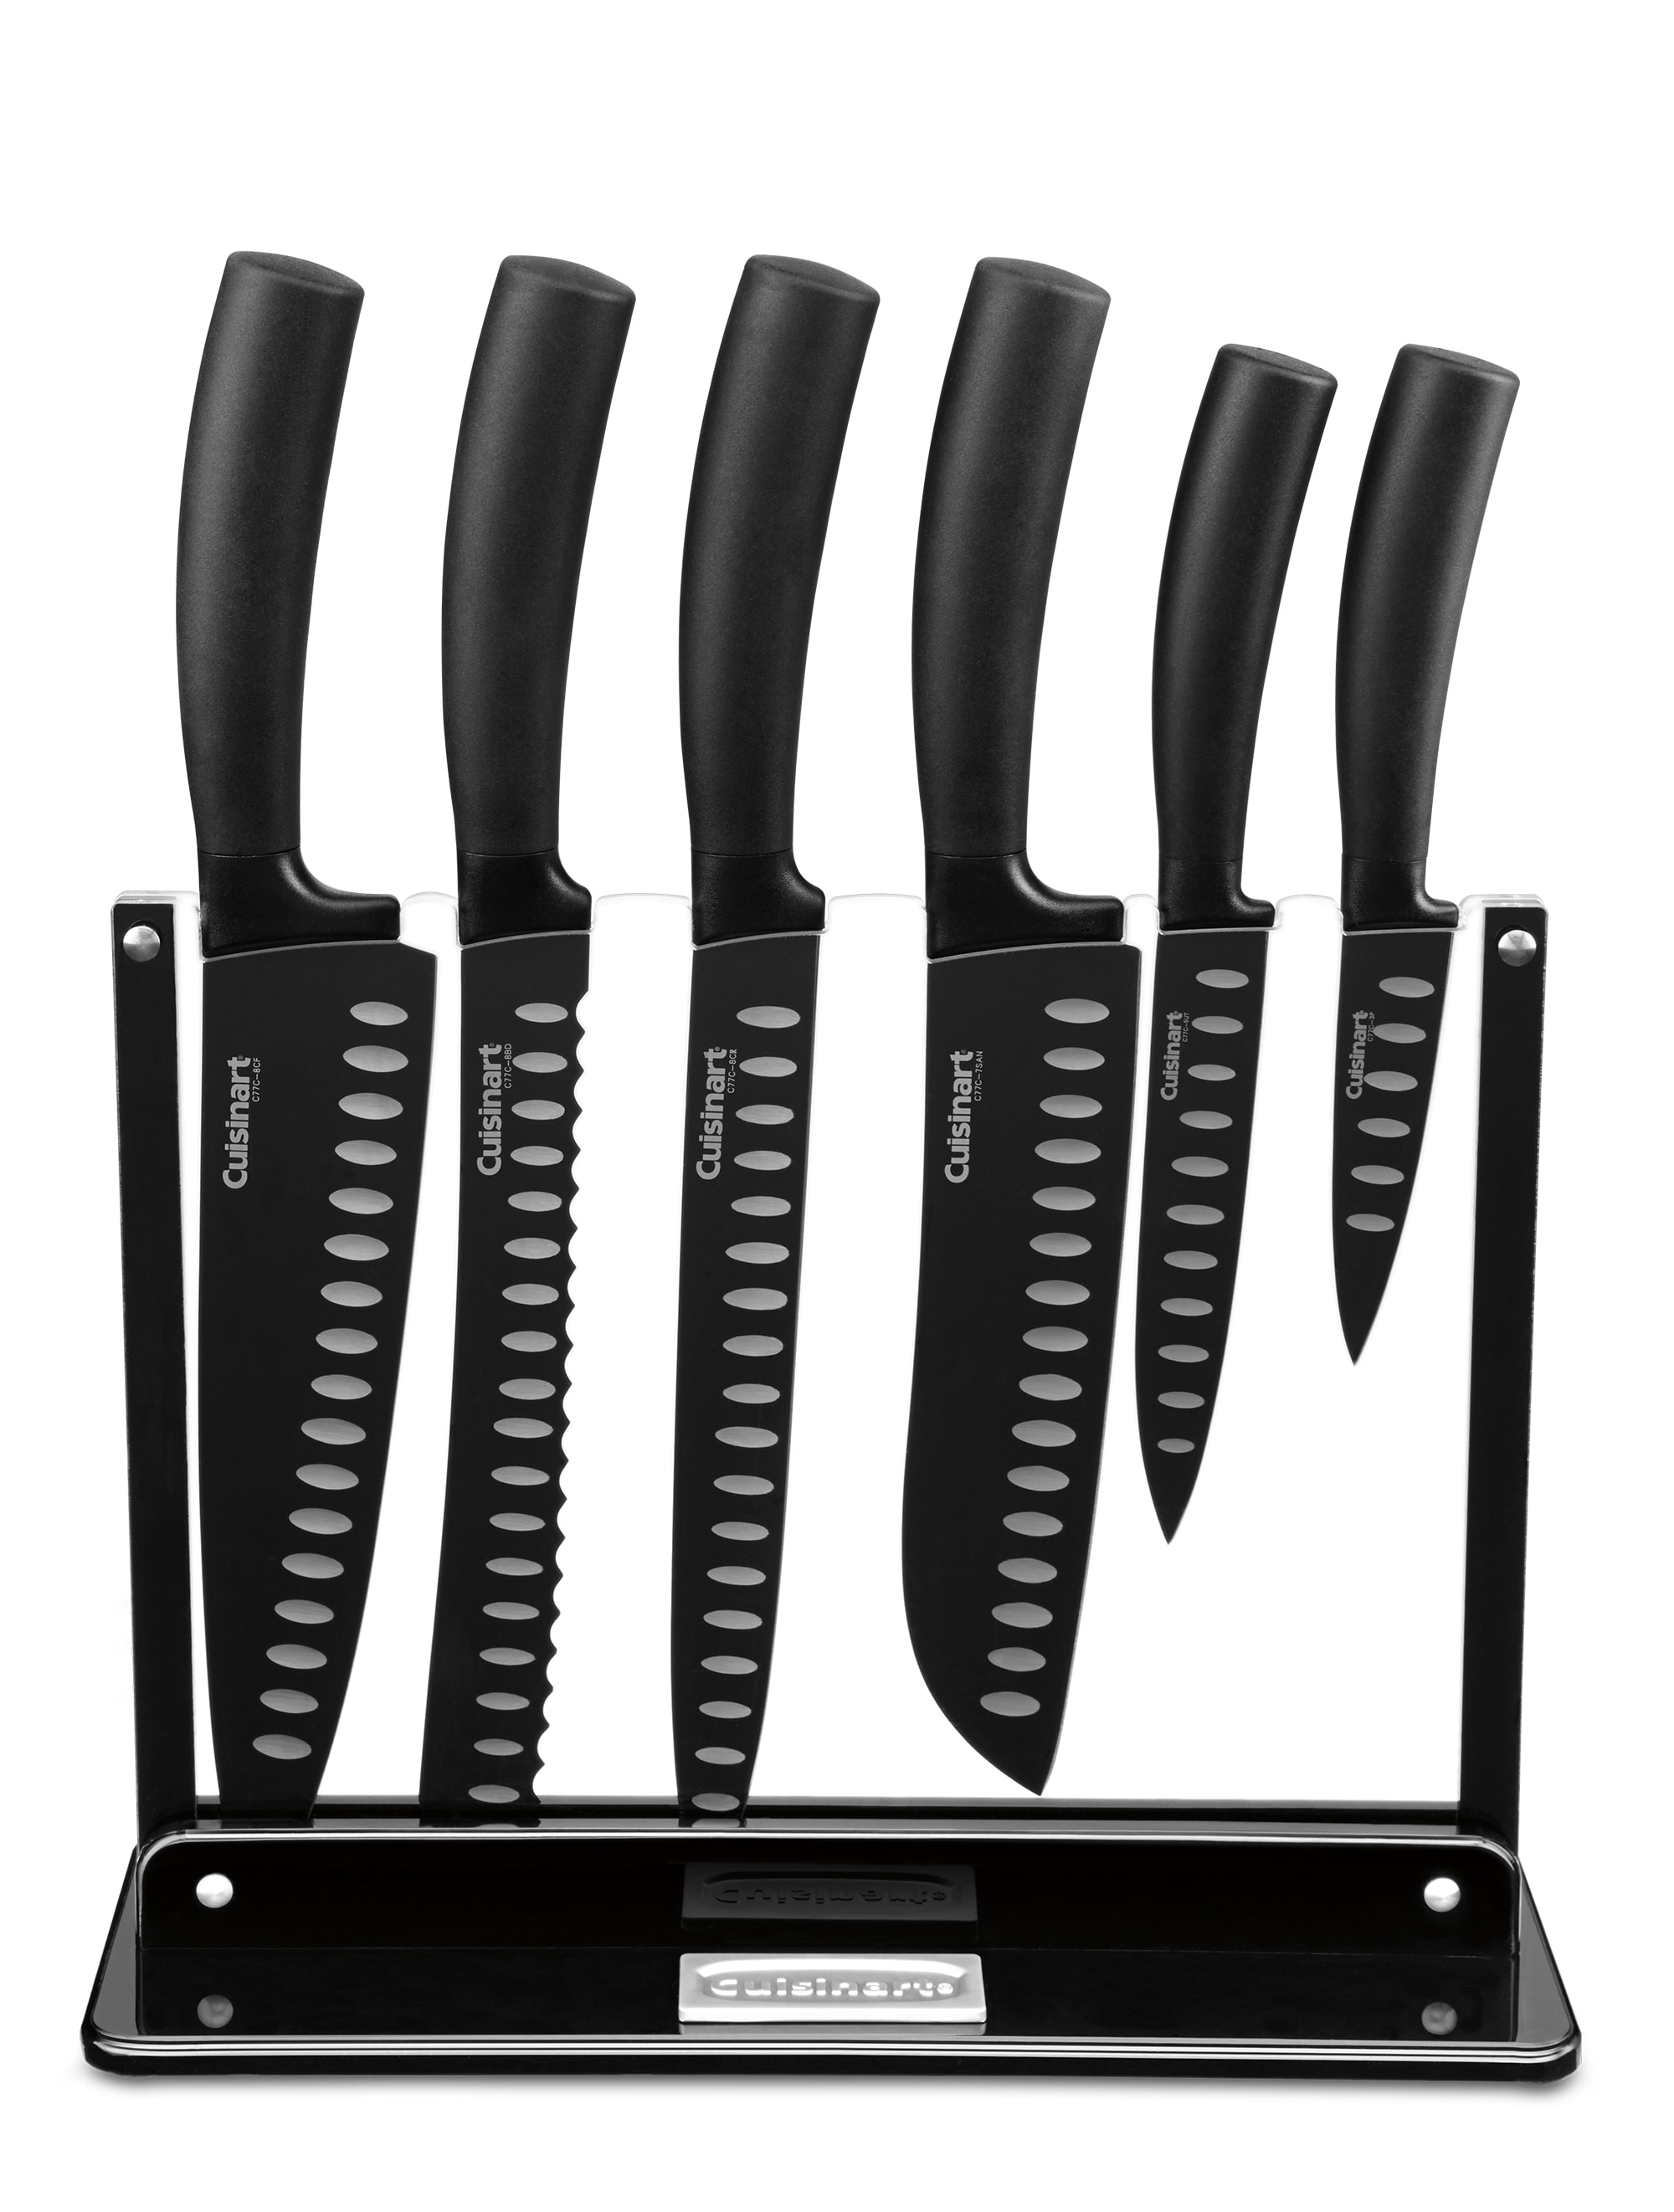 NEW Cuisinart Classic Triple Rivet 6-Piece Steak Knife Set Stainless Steel  C77TR